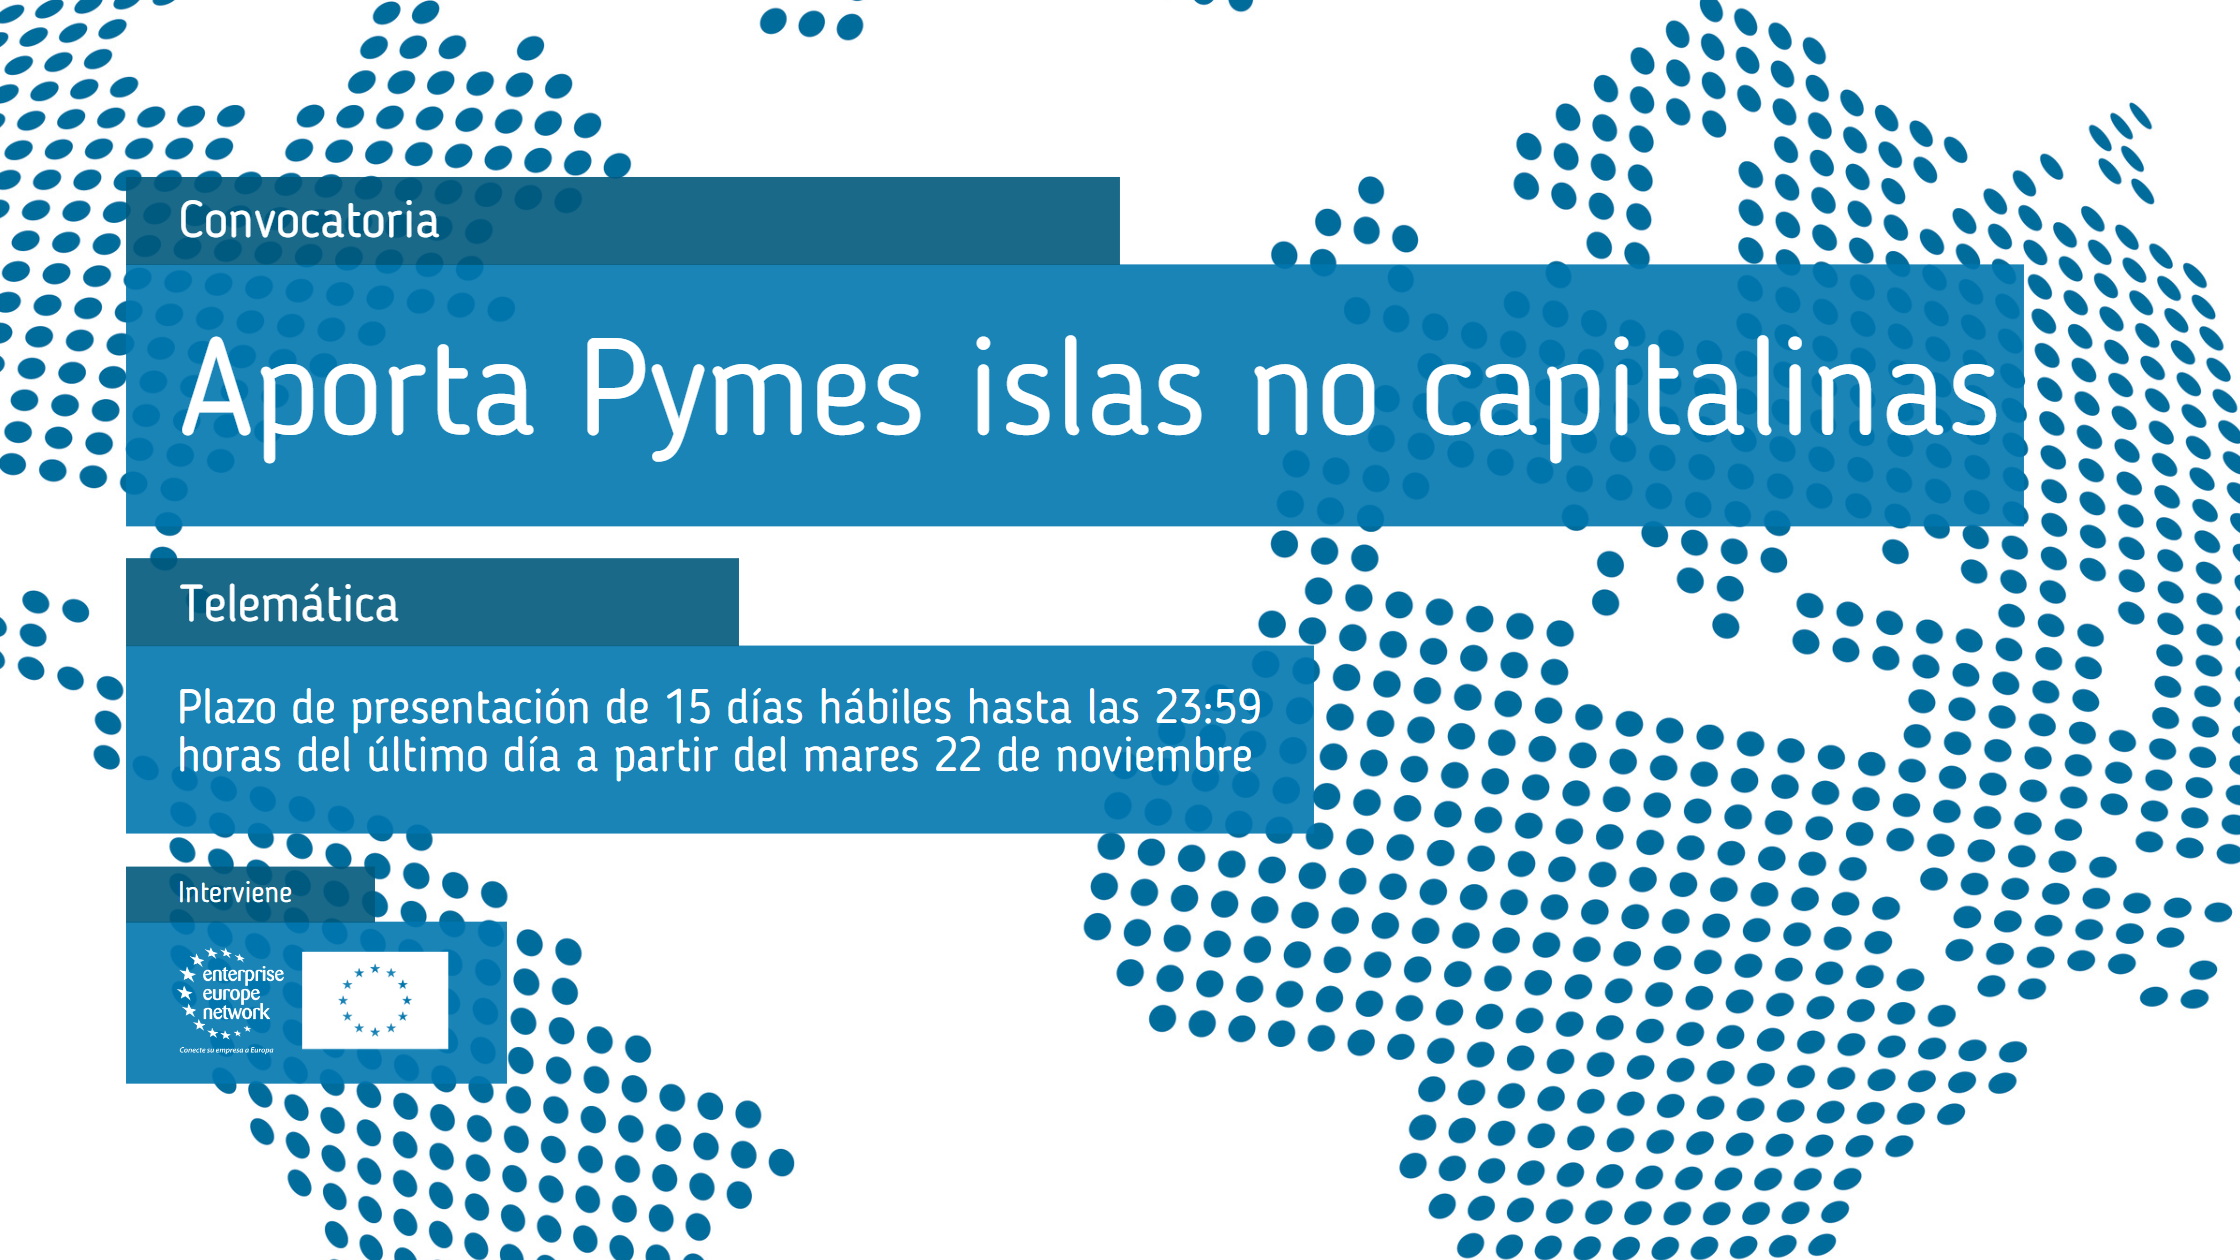 Aporta_Pymes_islas_no_capitalinas